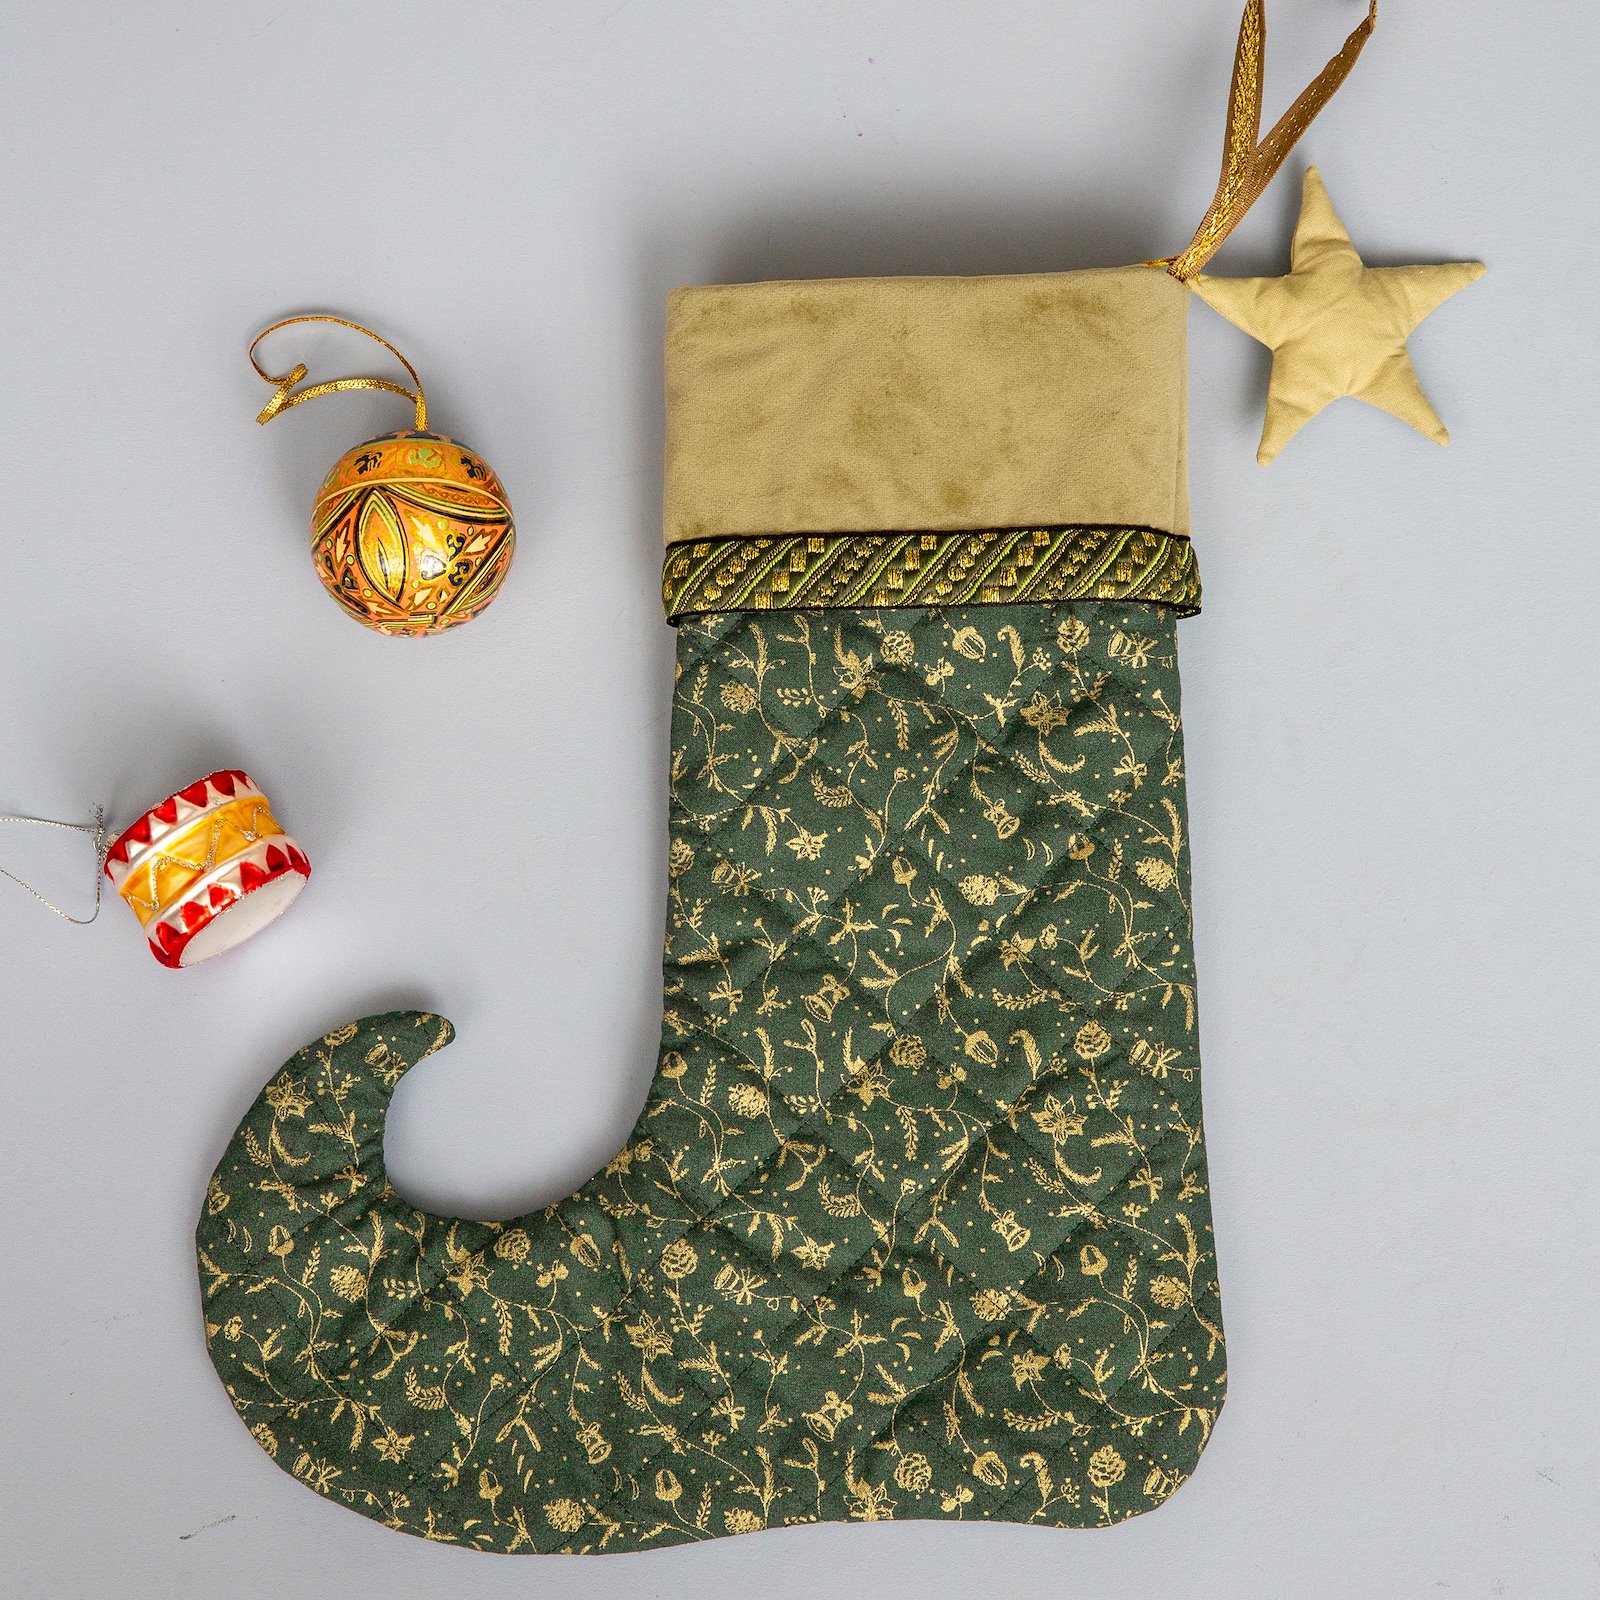 Christmas sock and heart p90311_790140_824166_22335_22288_p90333_4221_35290_sskit